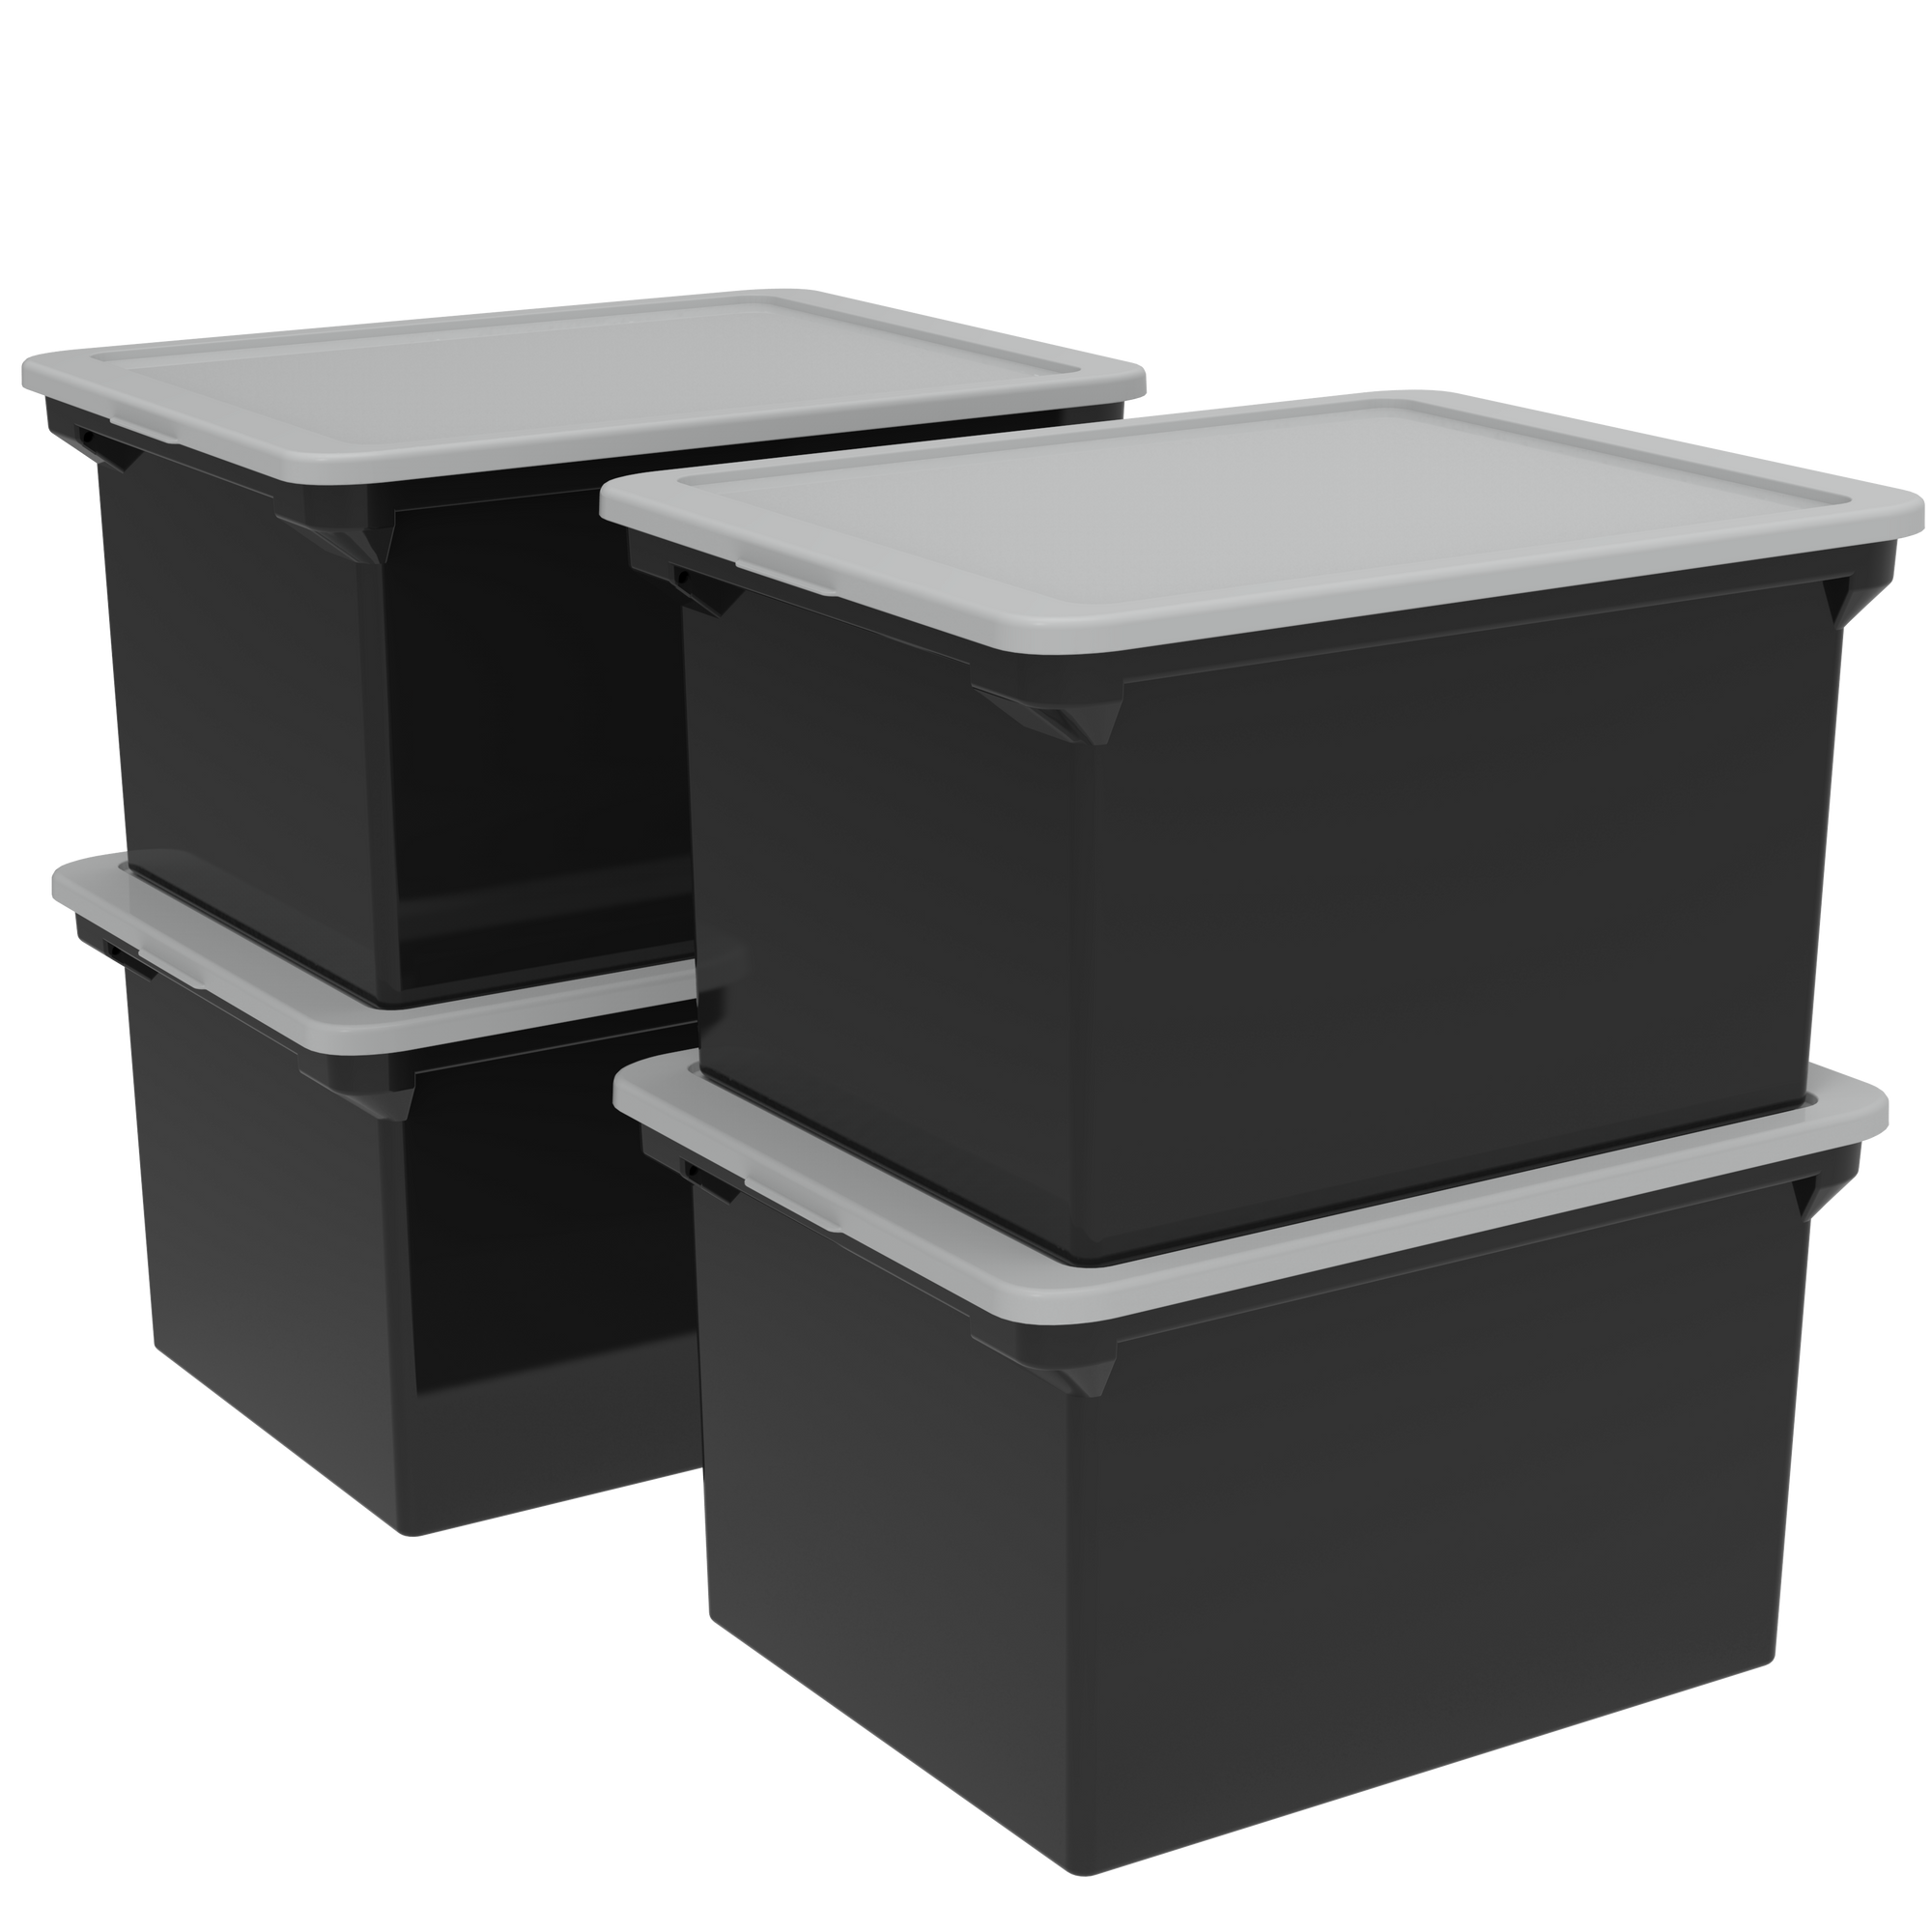 Storex Storage File Tote, Black/Silver (4 units/pack)